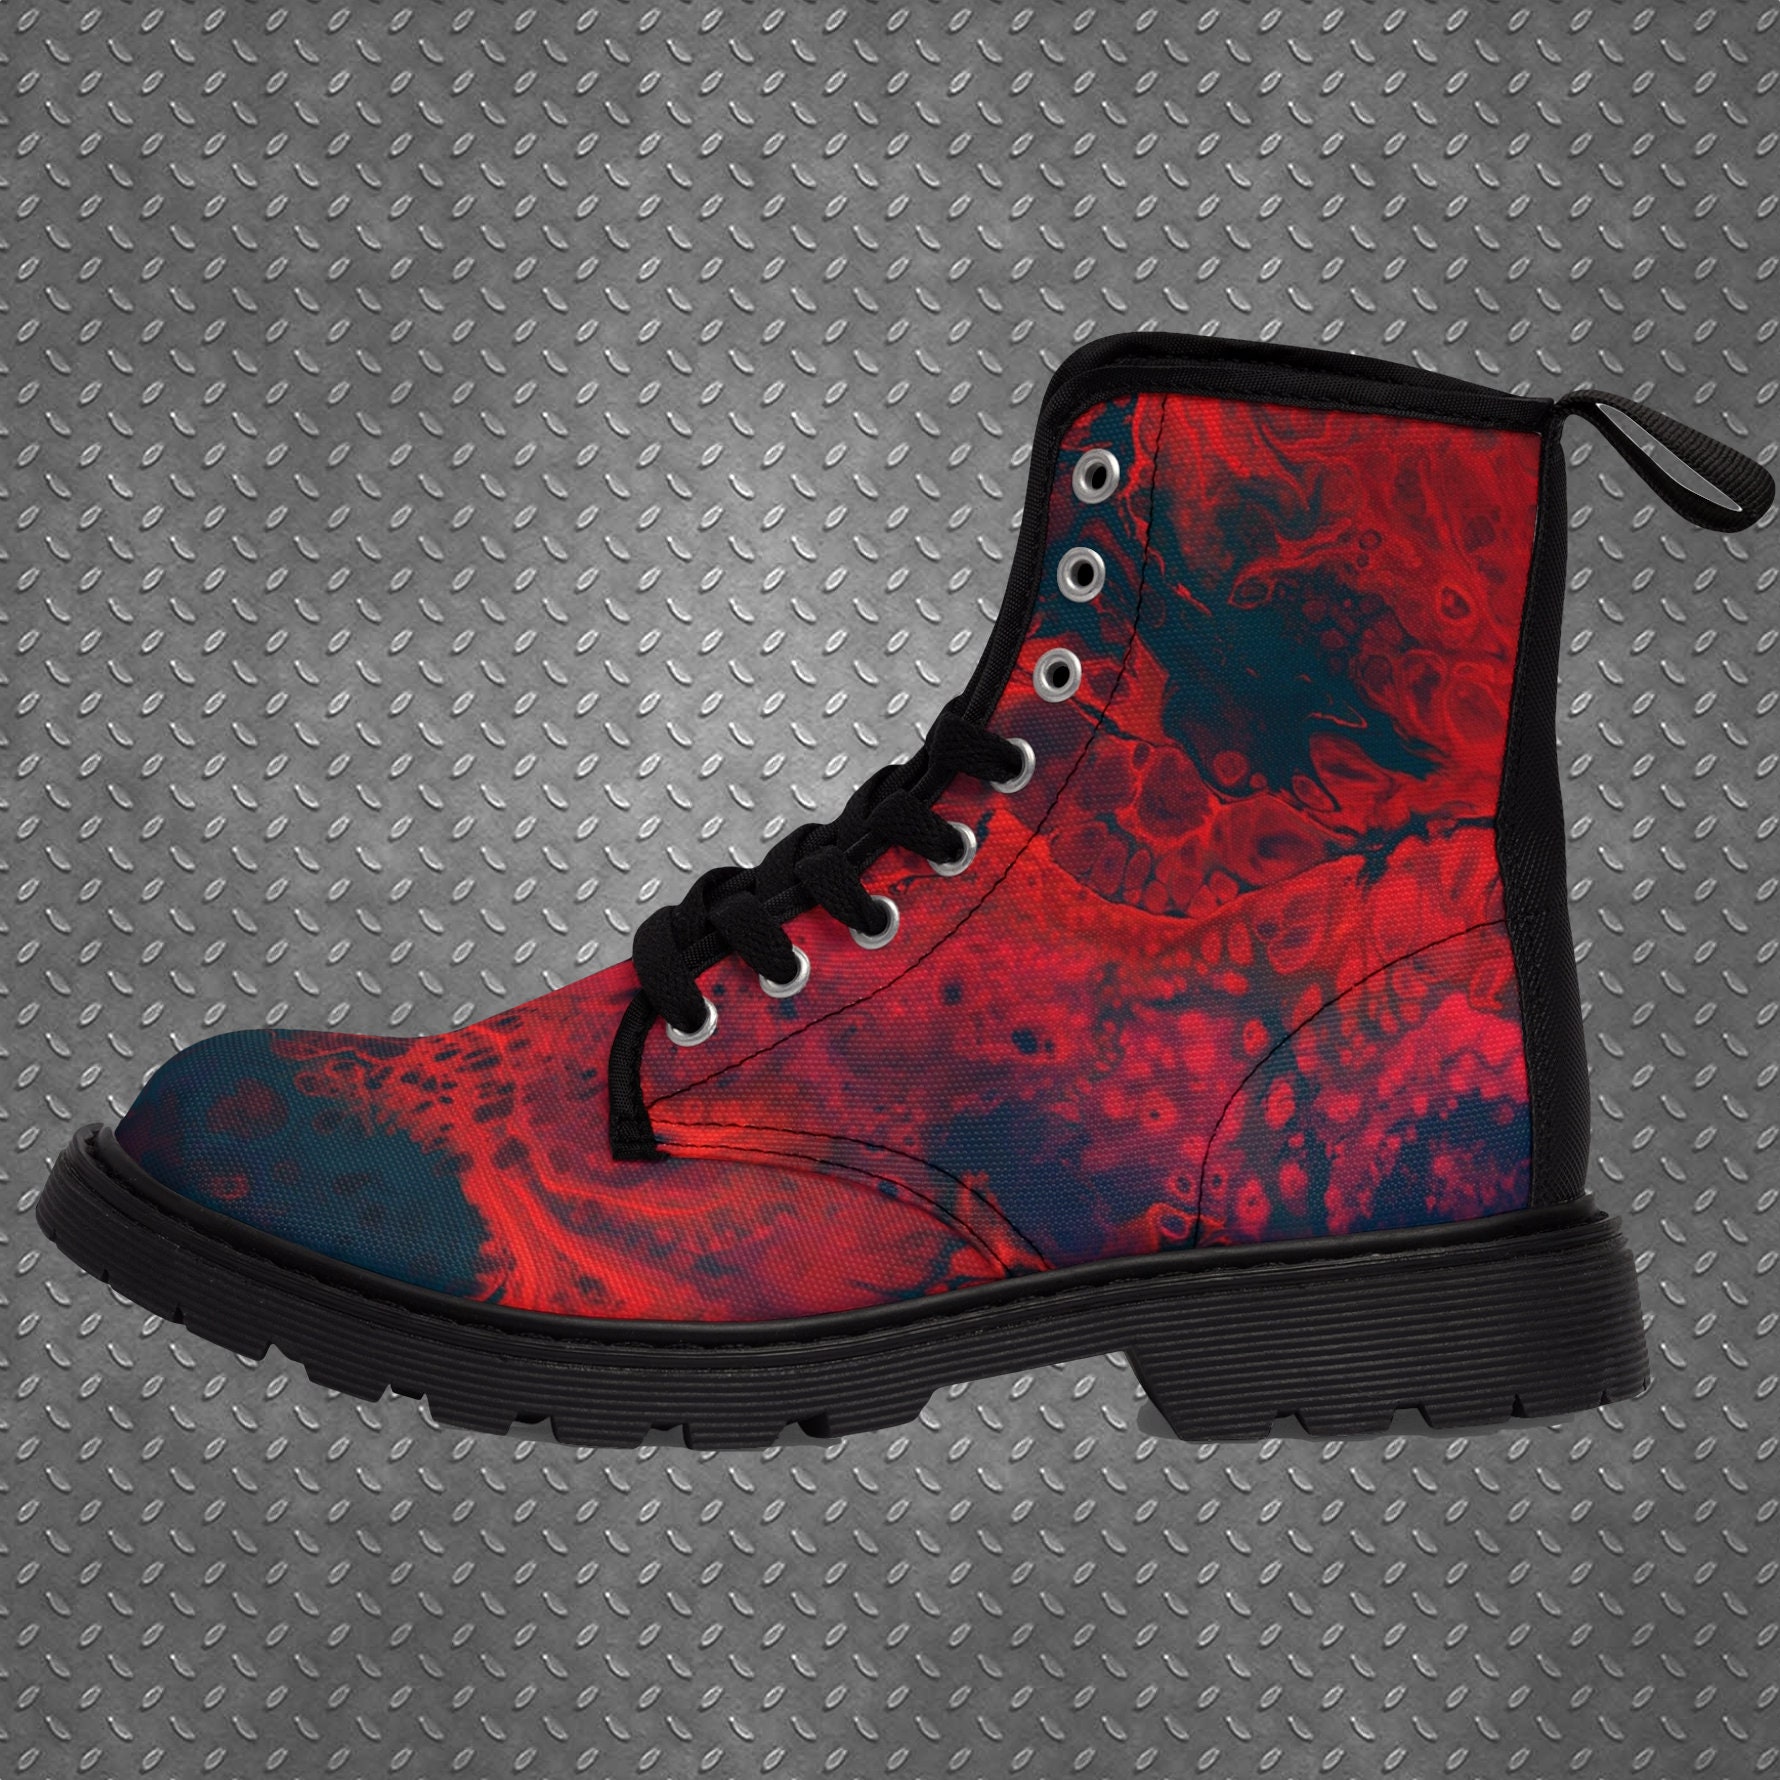 BOTAS RUST DE HOMBRE Punk Goth Metal Botas de lona con zapato Soul de goma Zapatos Zapatos para hombre Botas Like Doc Marten Style 